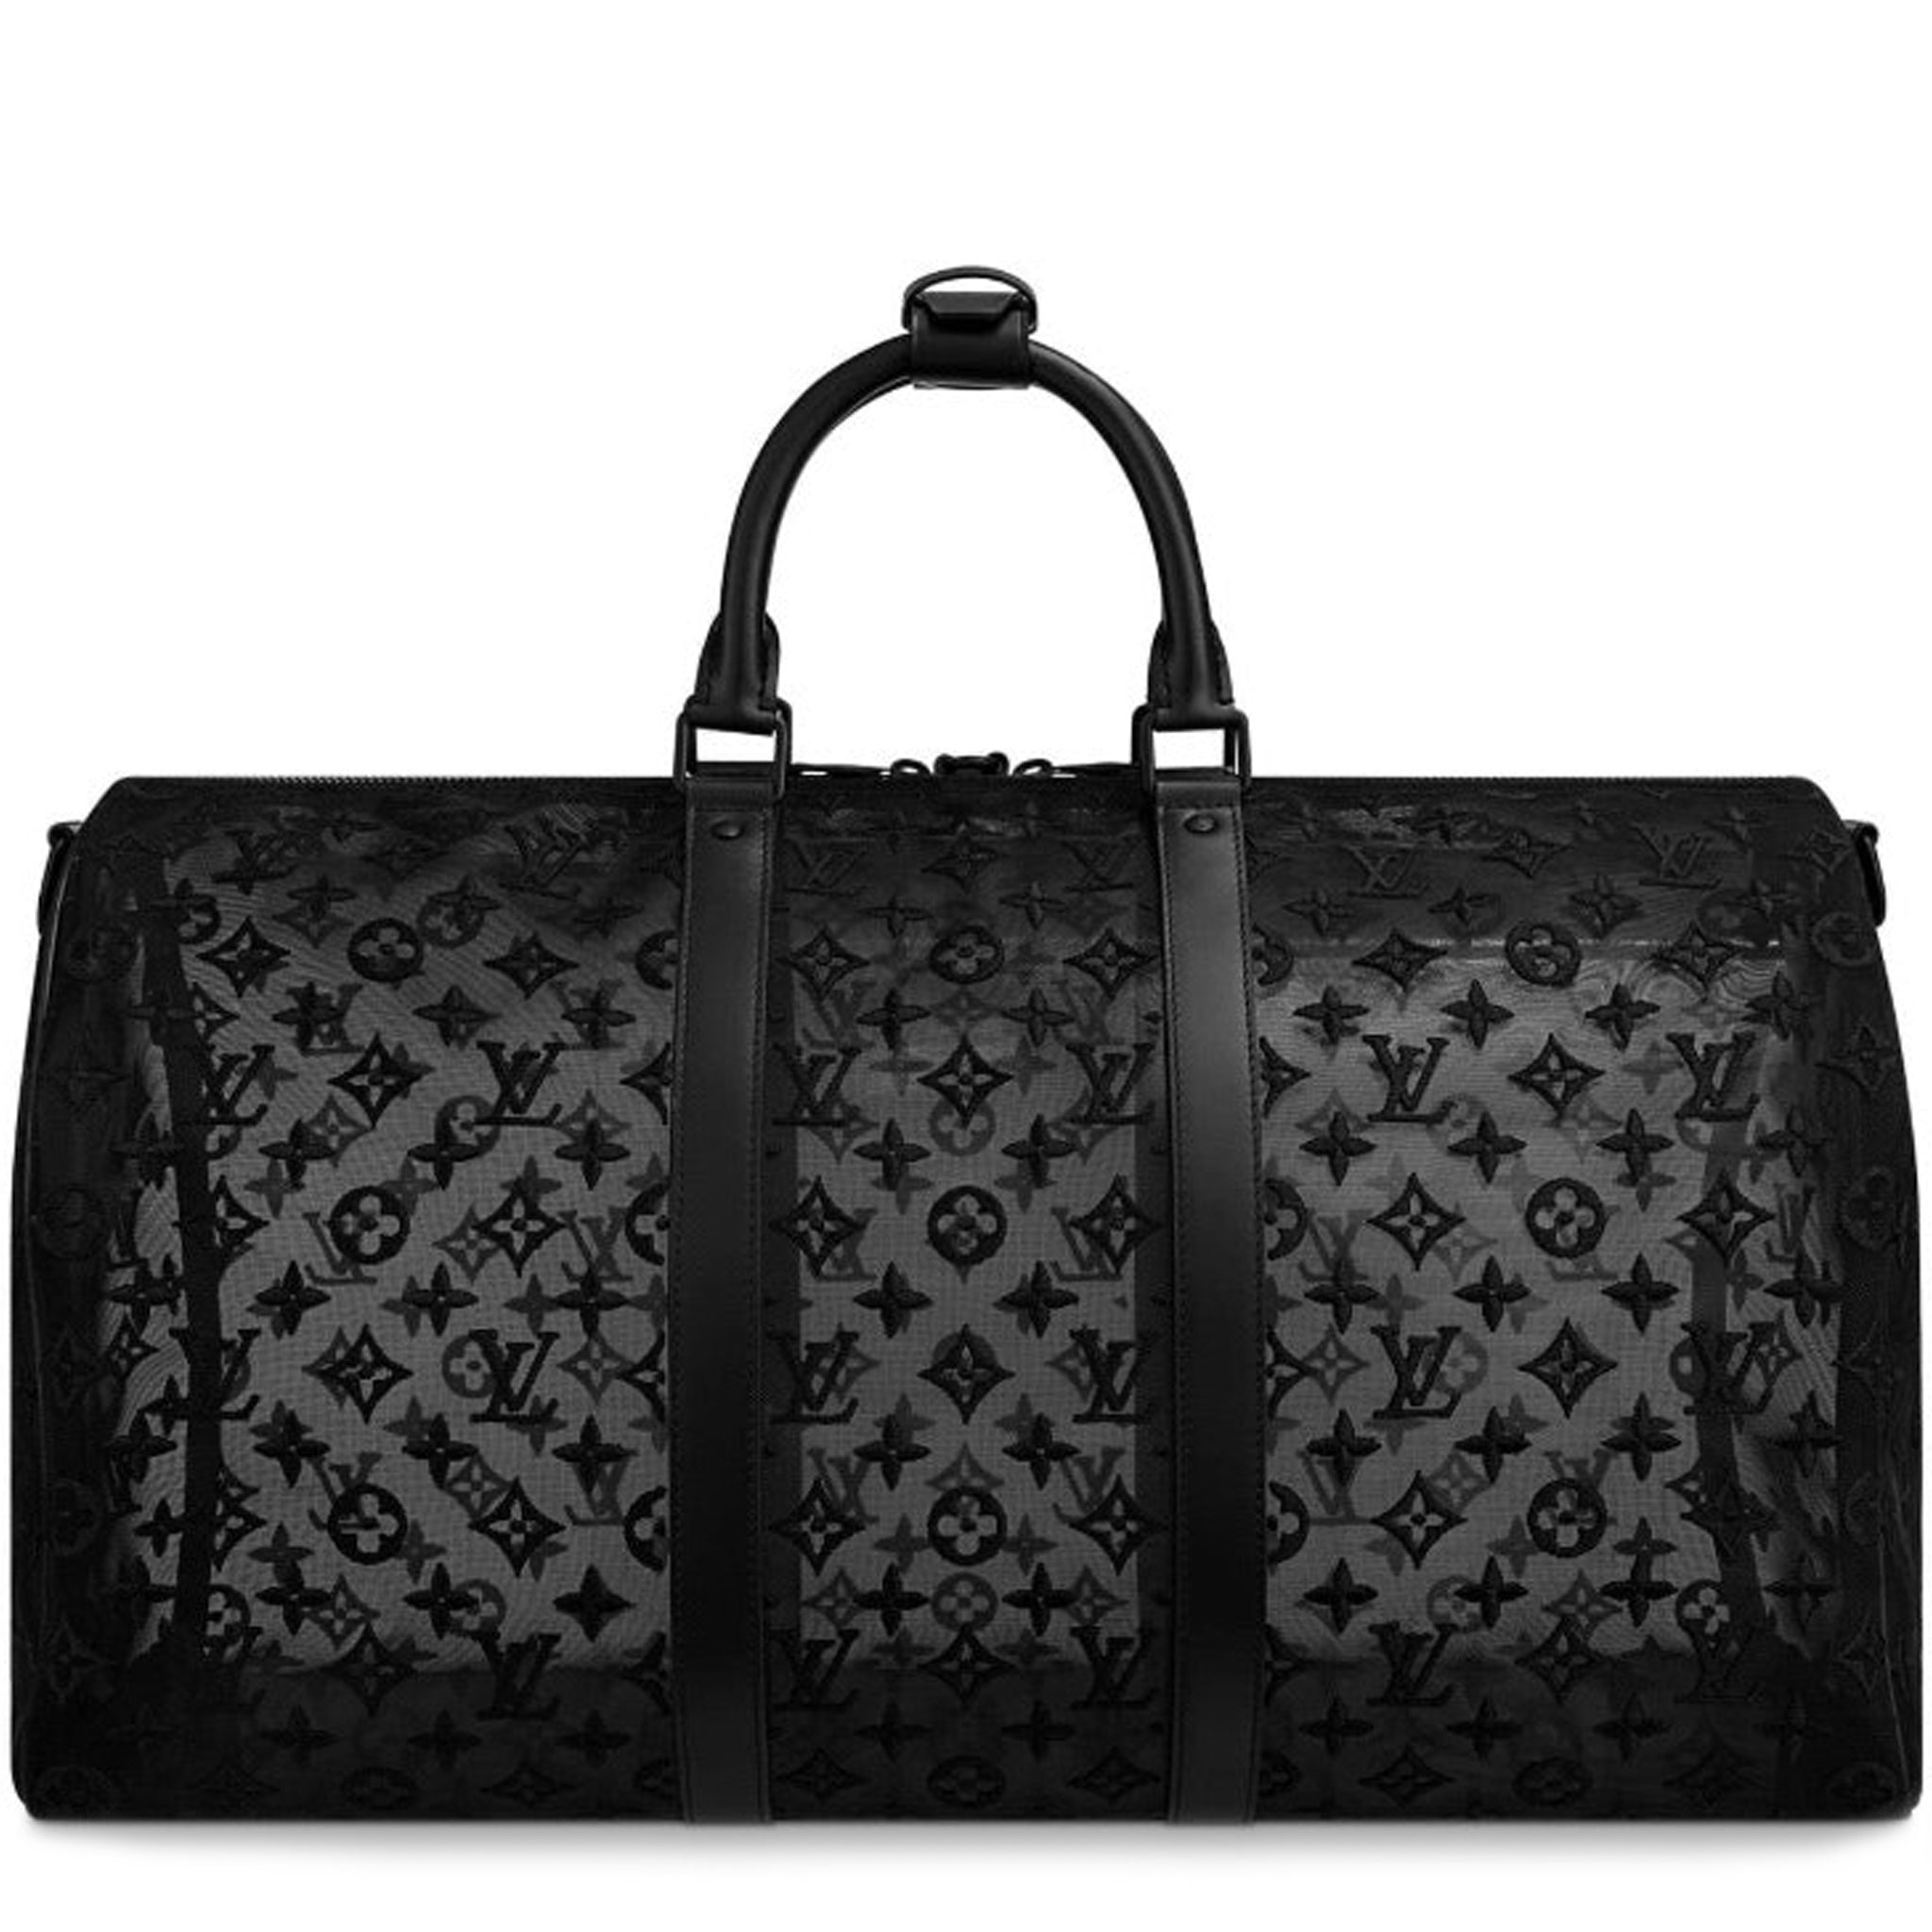 Louis Vuitton Black/White Leather and Mesh Laureate Platform